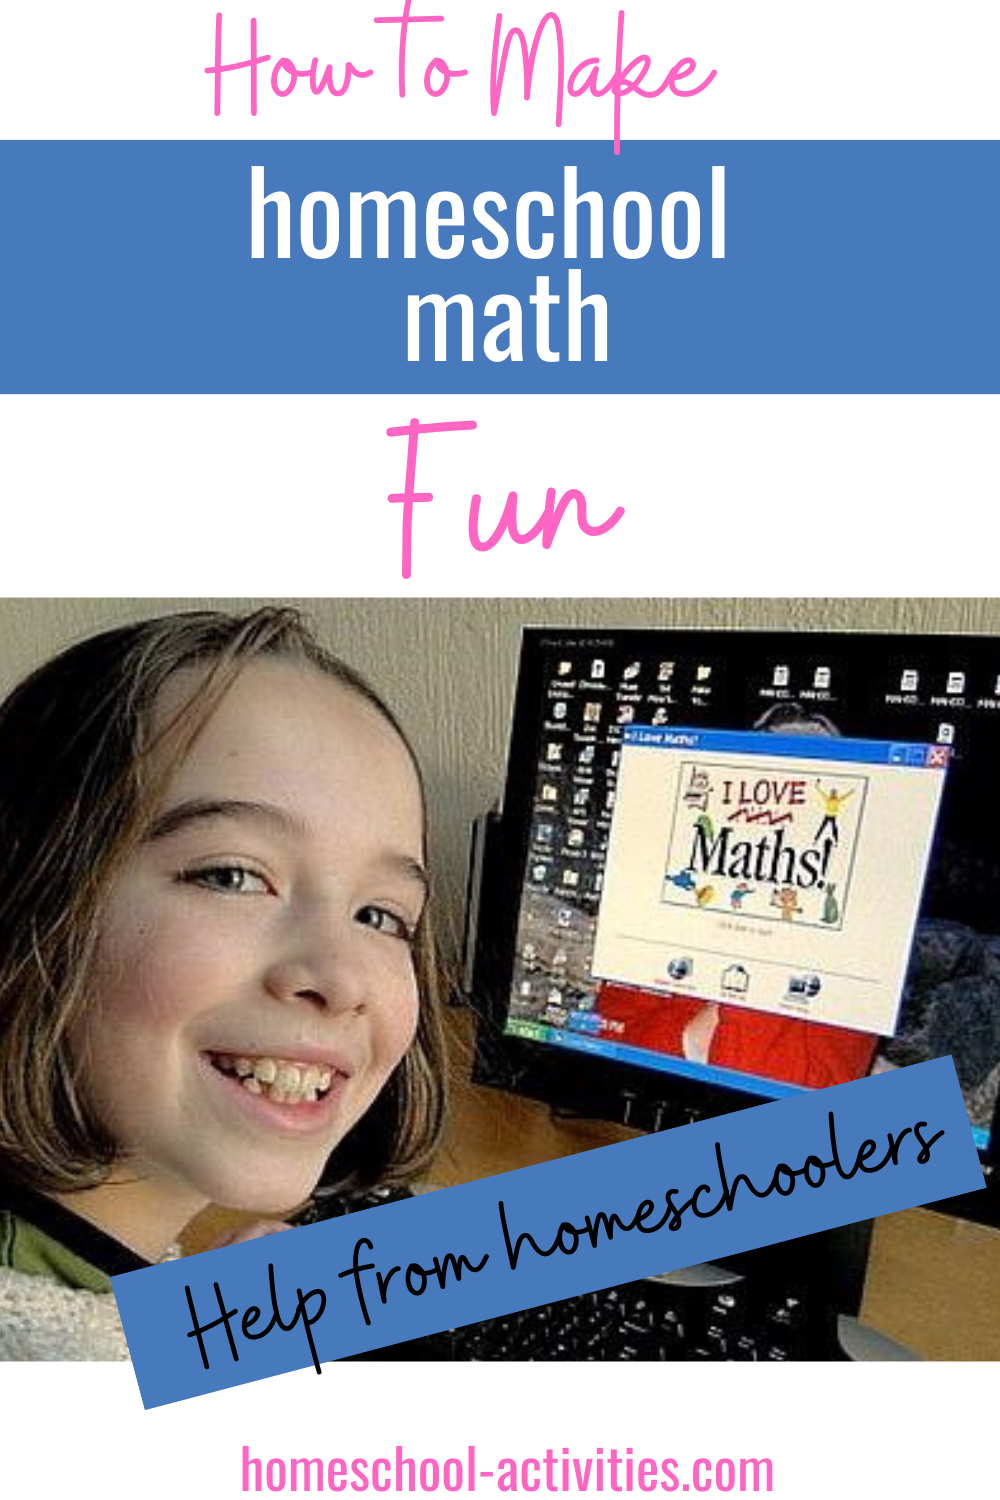 homeschool math help pin 120kb